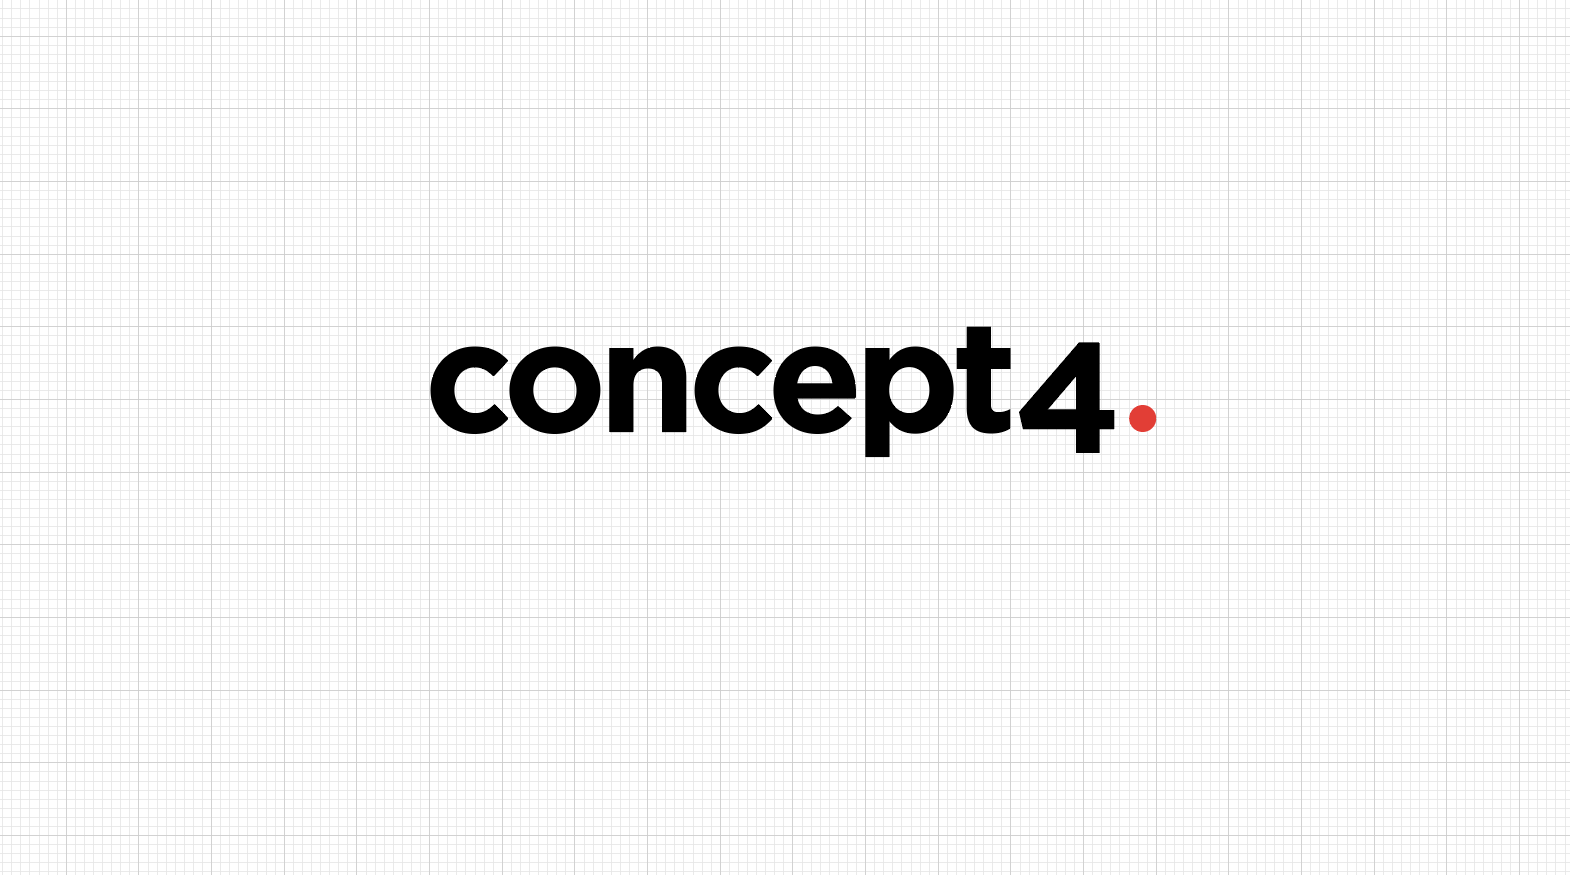 concept 4 logo grid